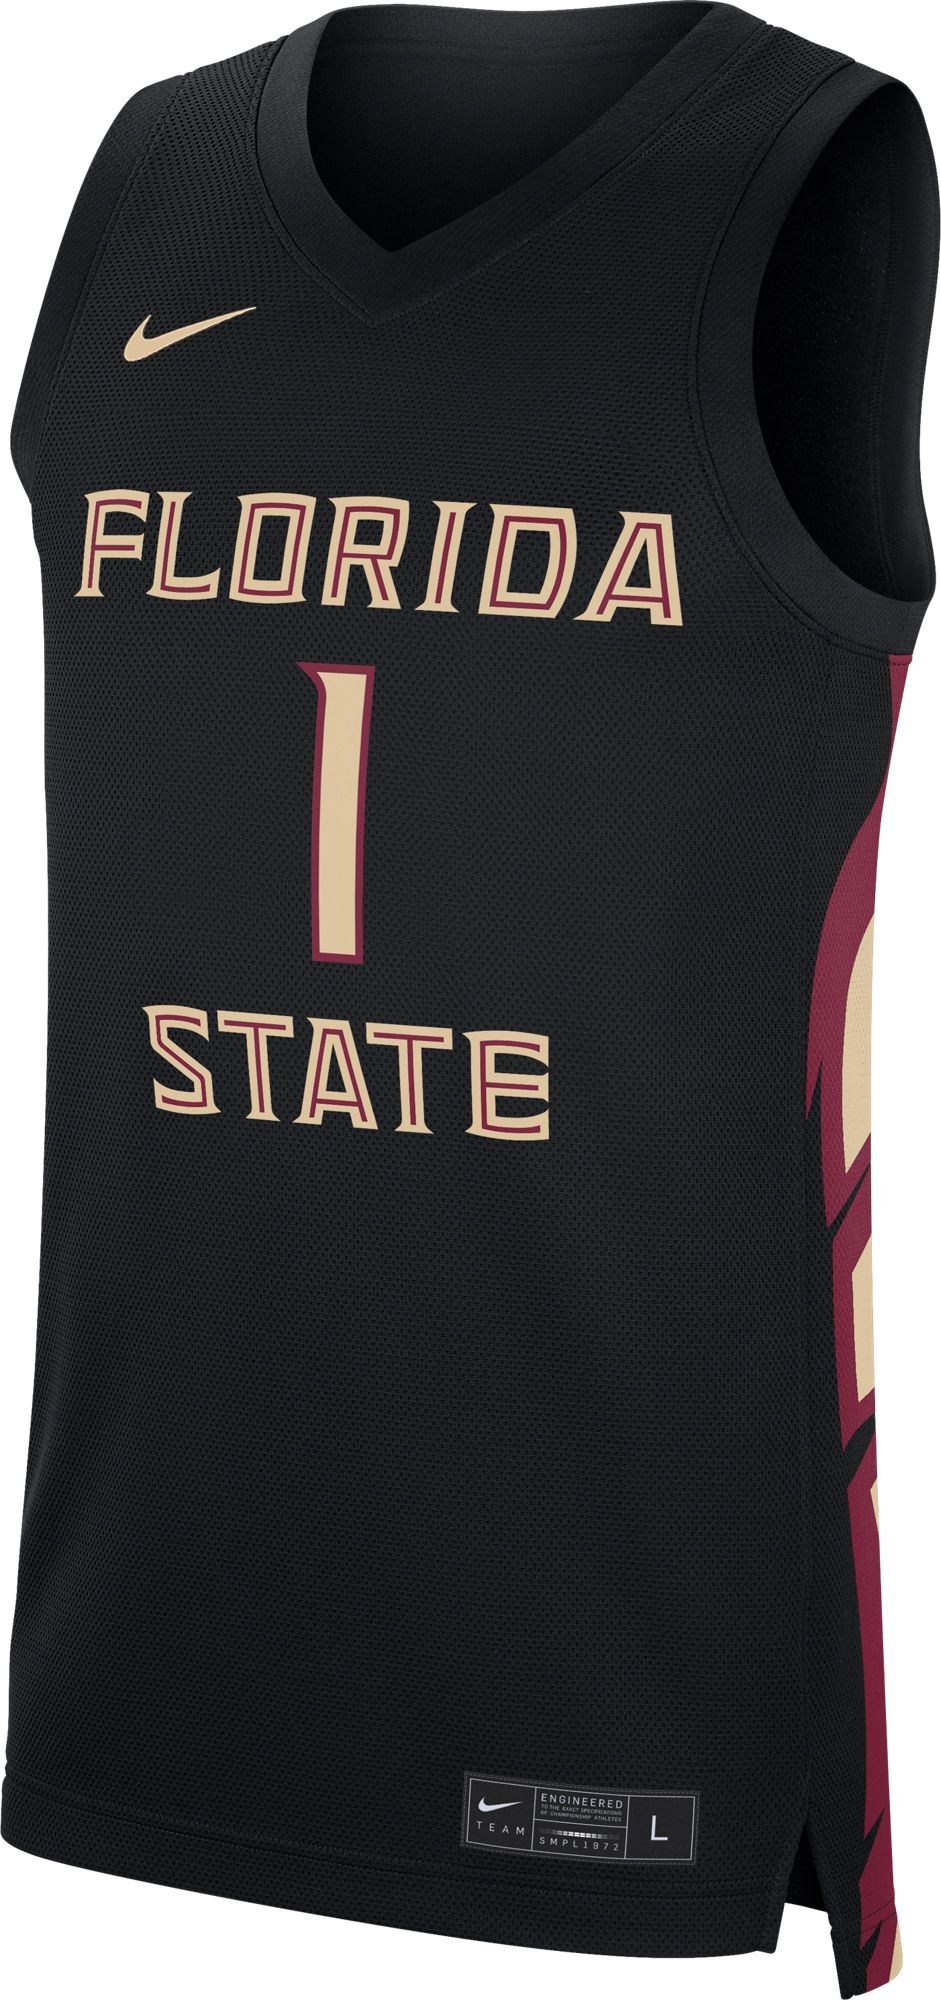 Nike Men's Florida State Seminoles #1 Black Replica Basketball Jersey